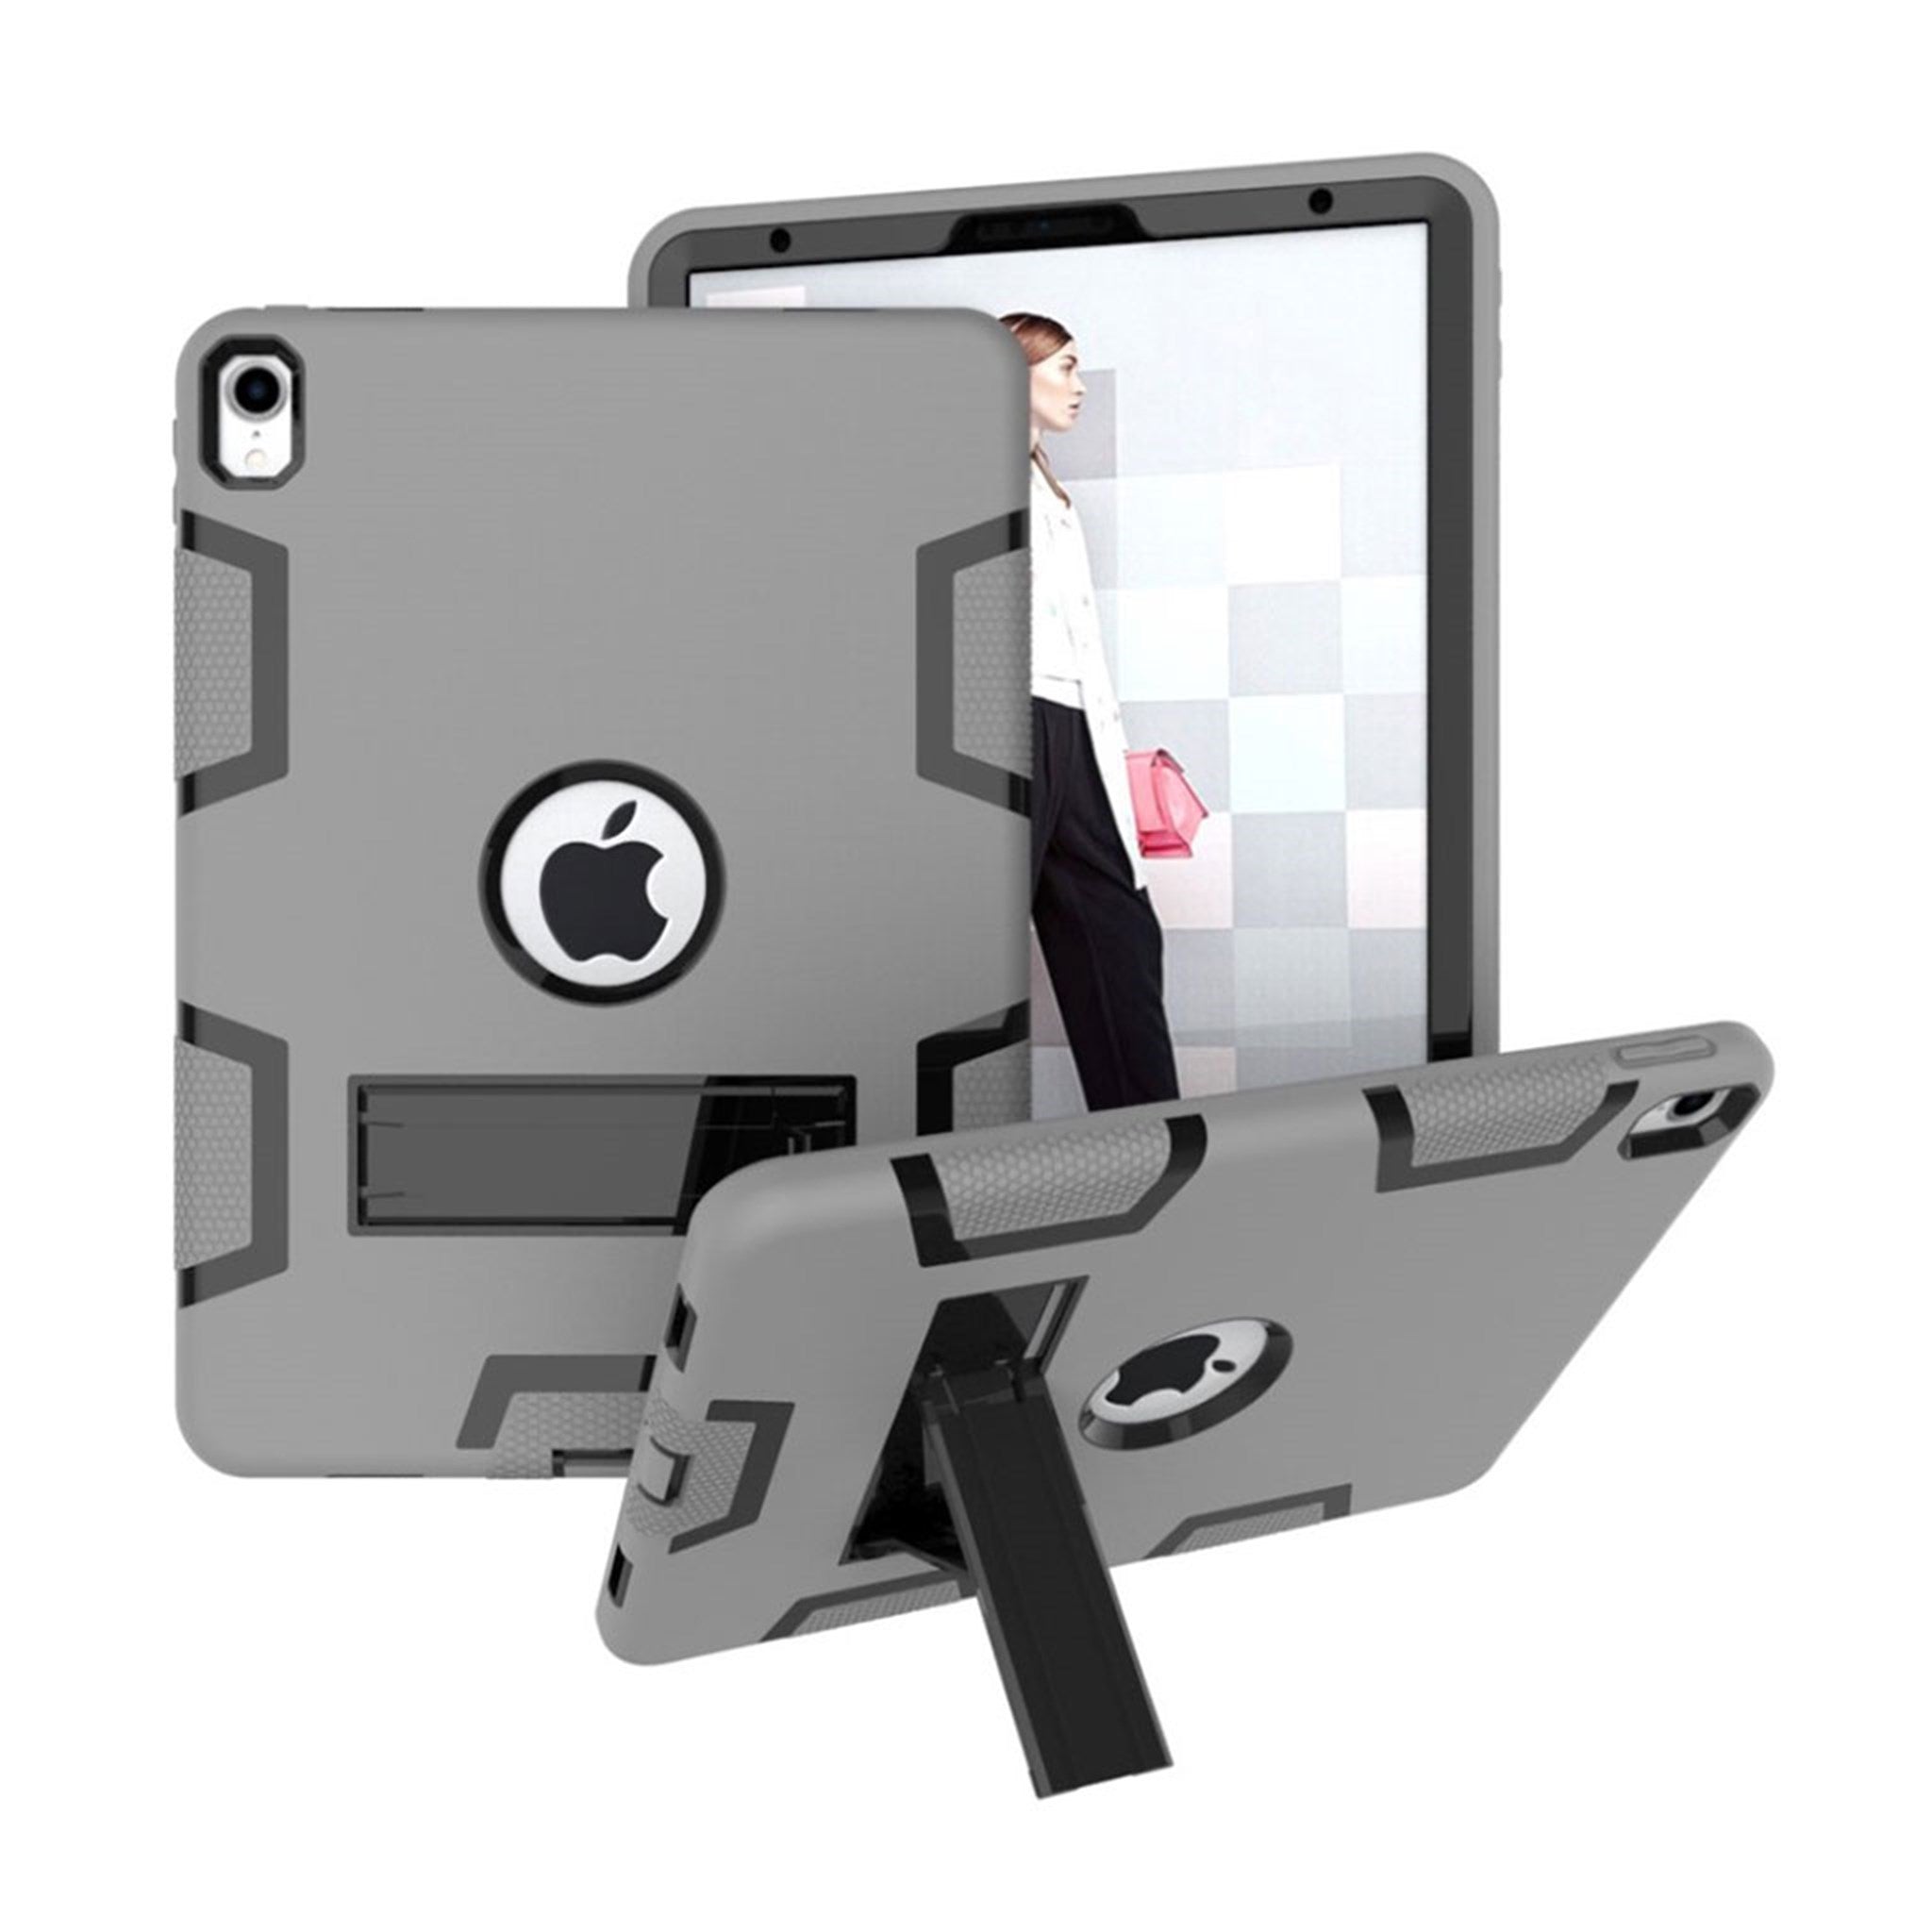 iPad Pro 11 inch (2018) shock proof hybrid case - Grey / Black